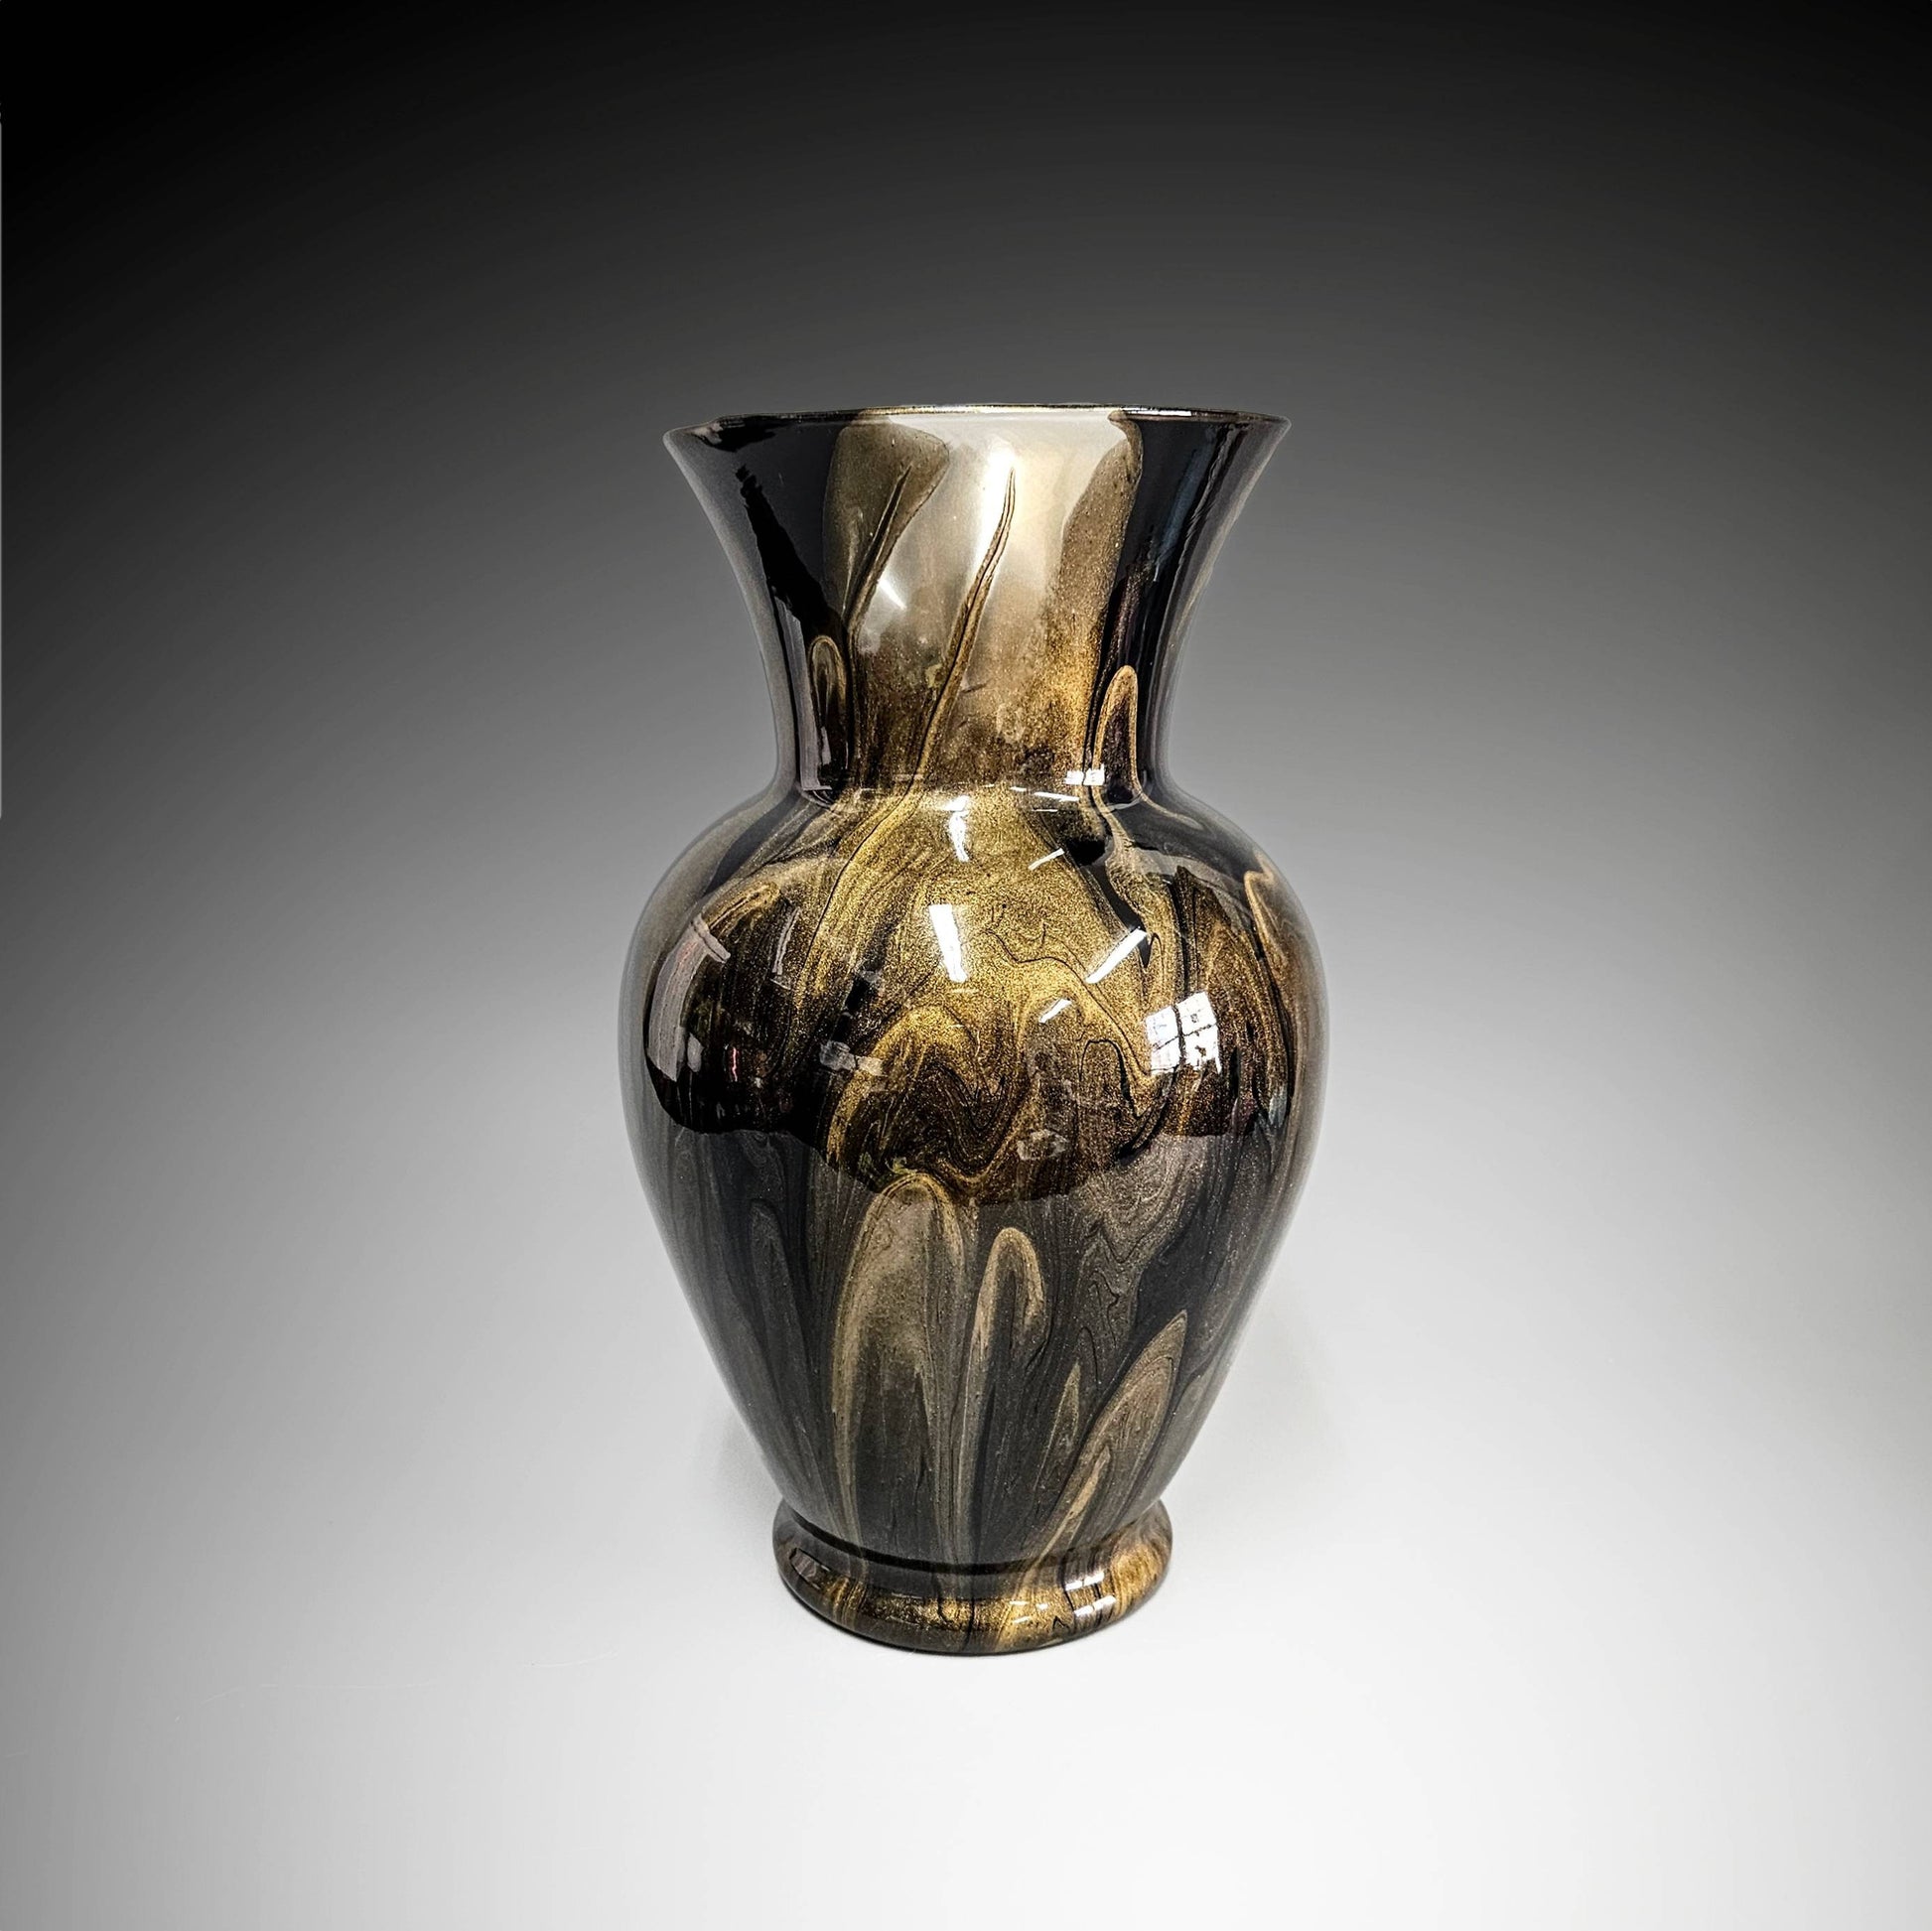 Black and Metallic Gold Large Centerpiece Vase | Fluid Art Gift Ideas